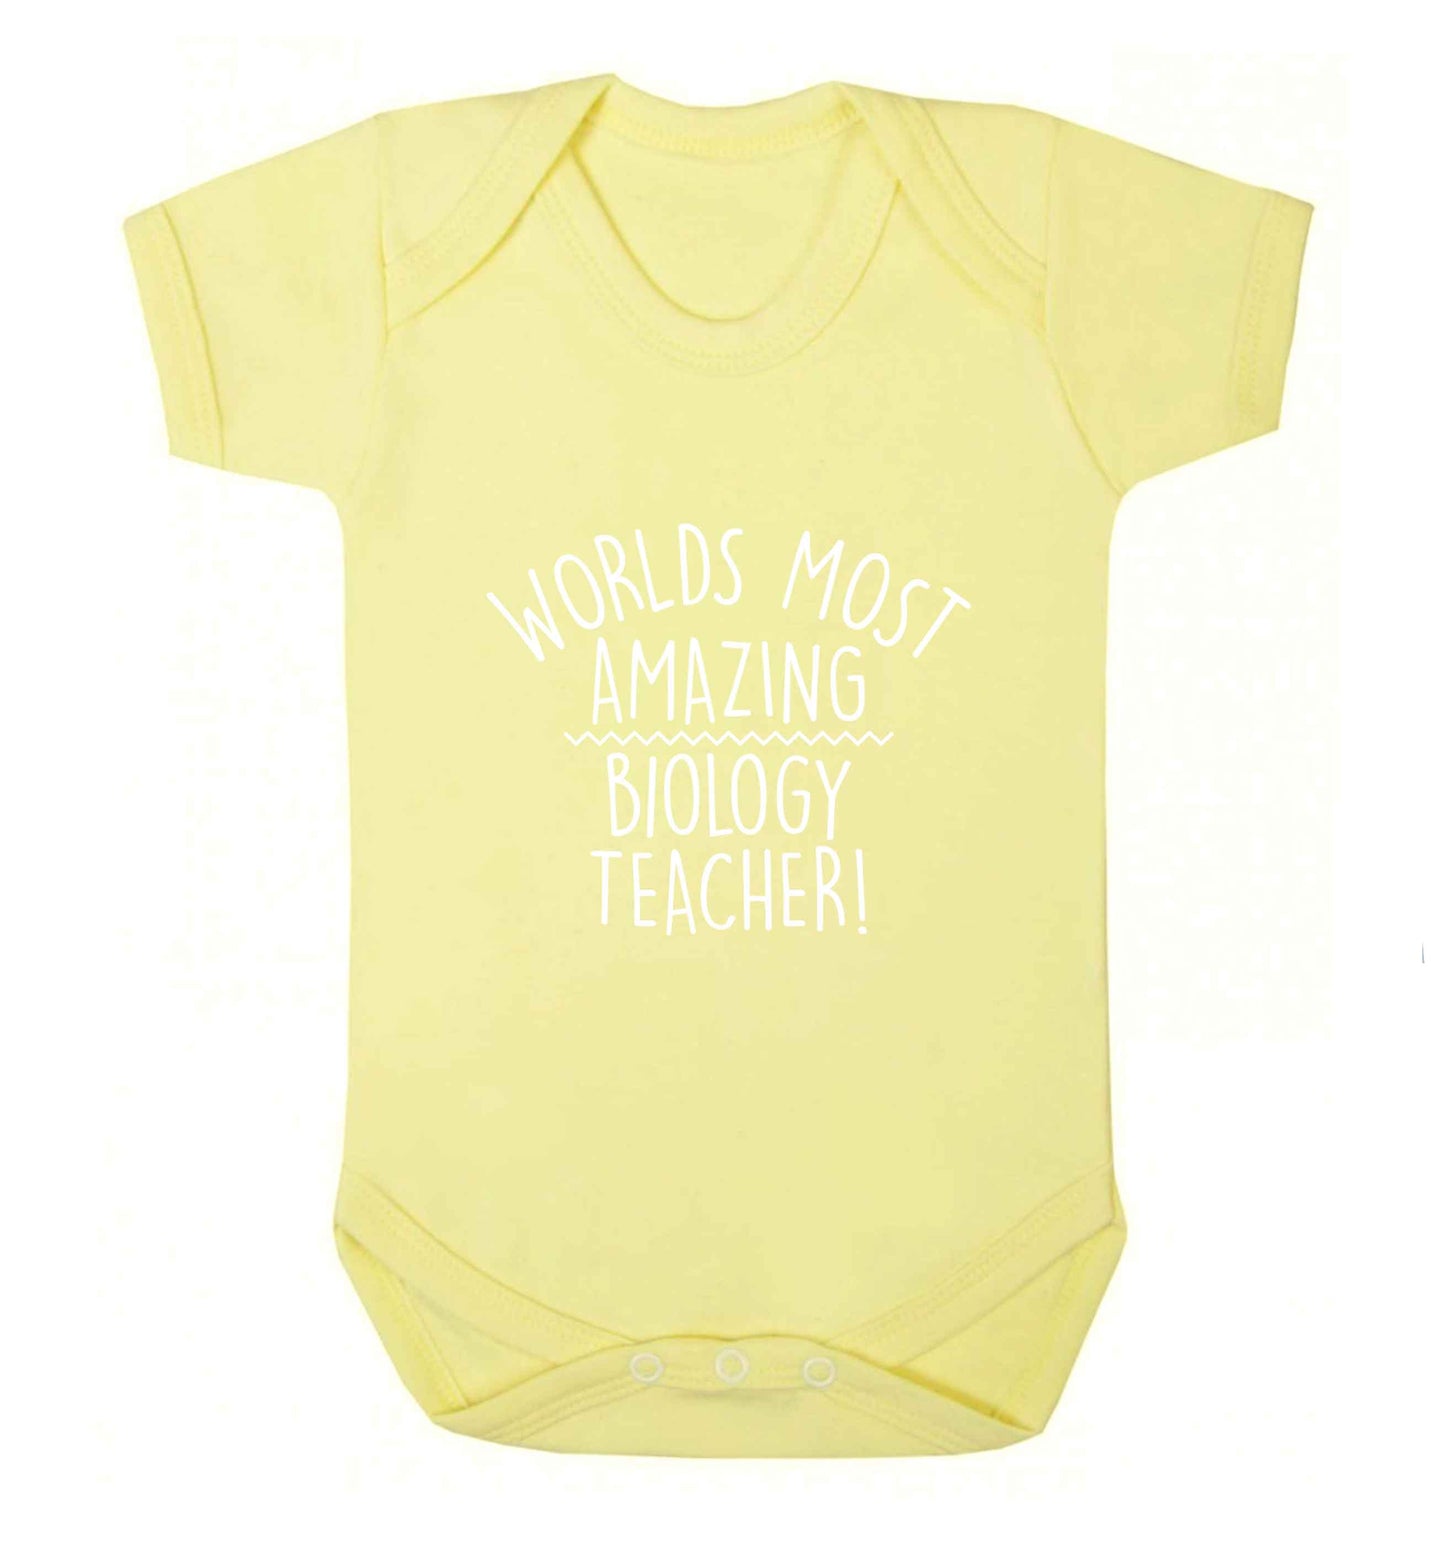 Worlds most amazing biology teacher baby vest pale yellow 18-24 months